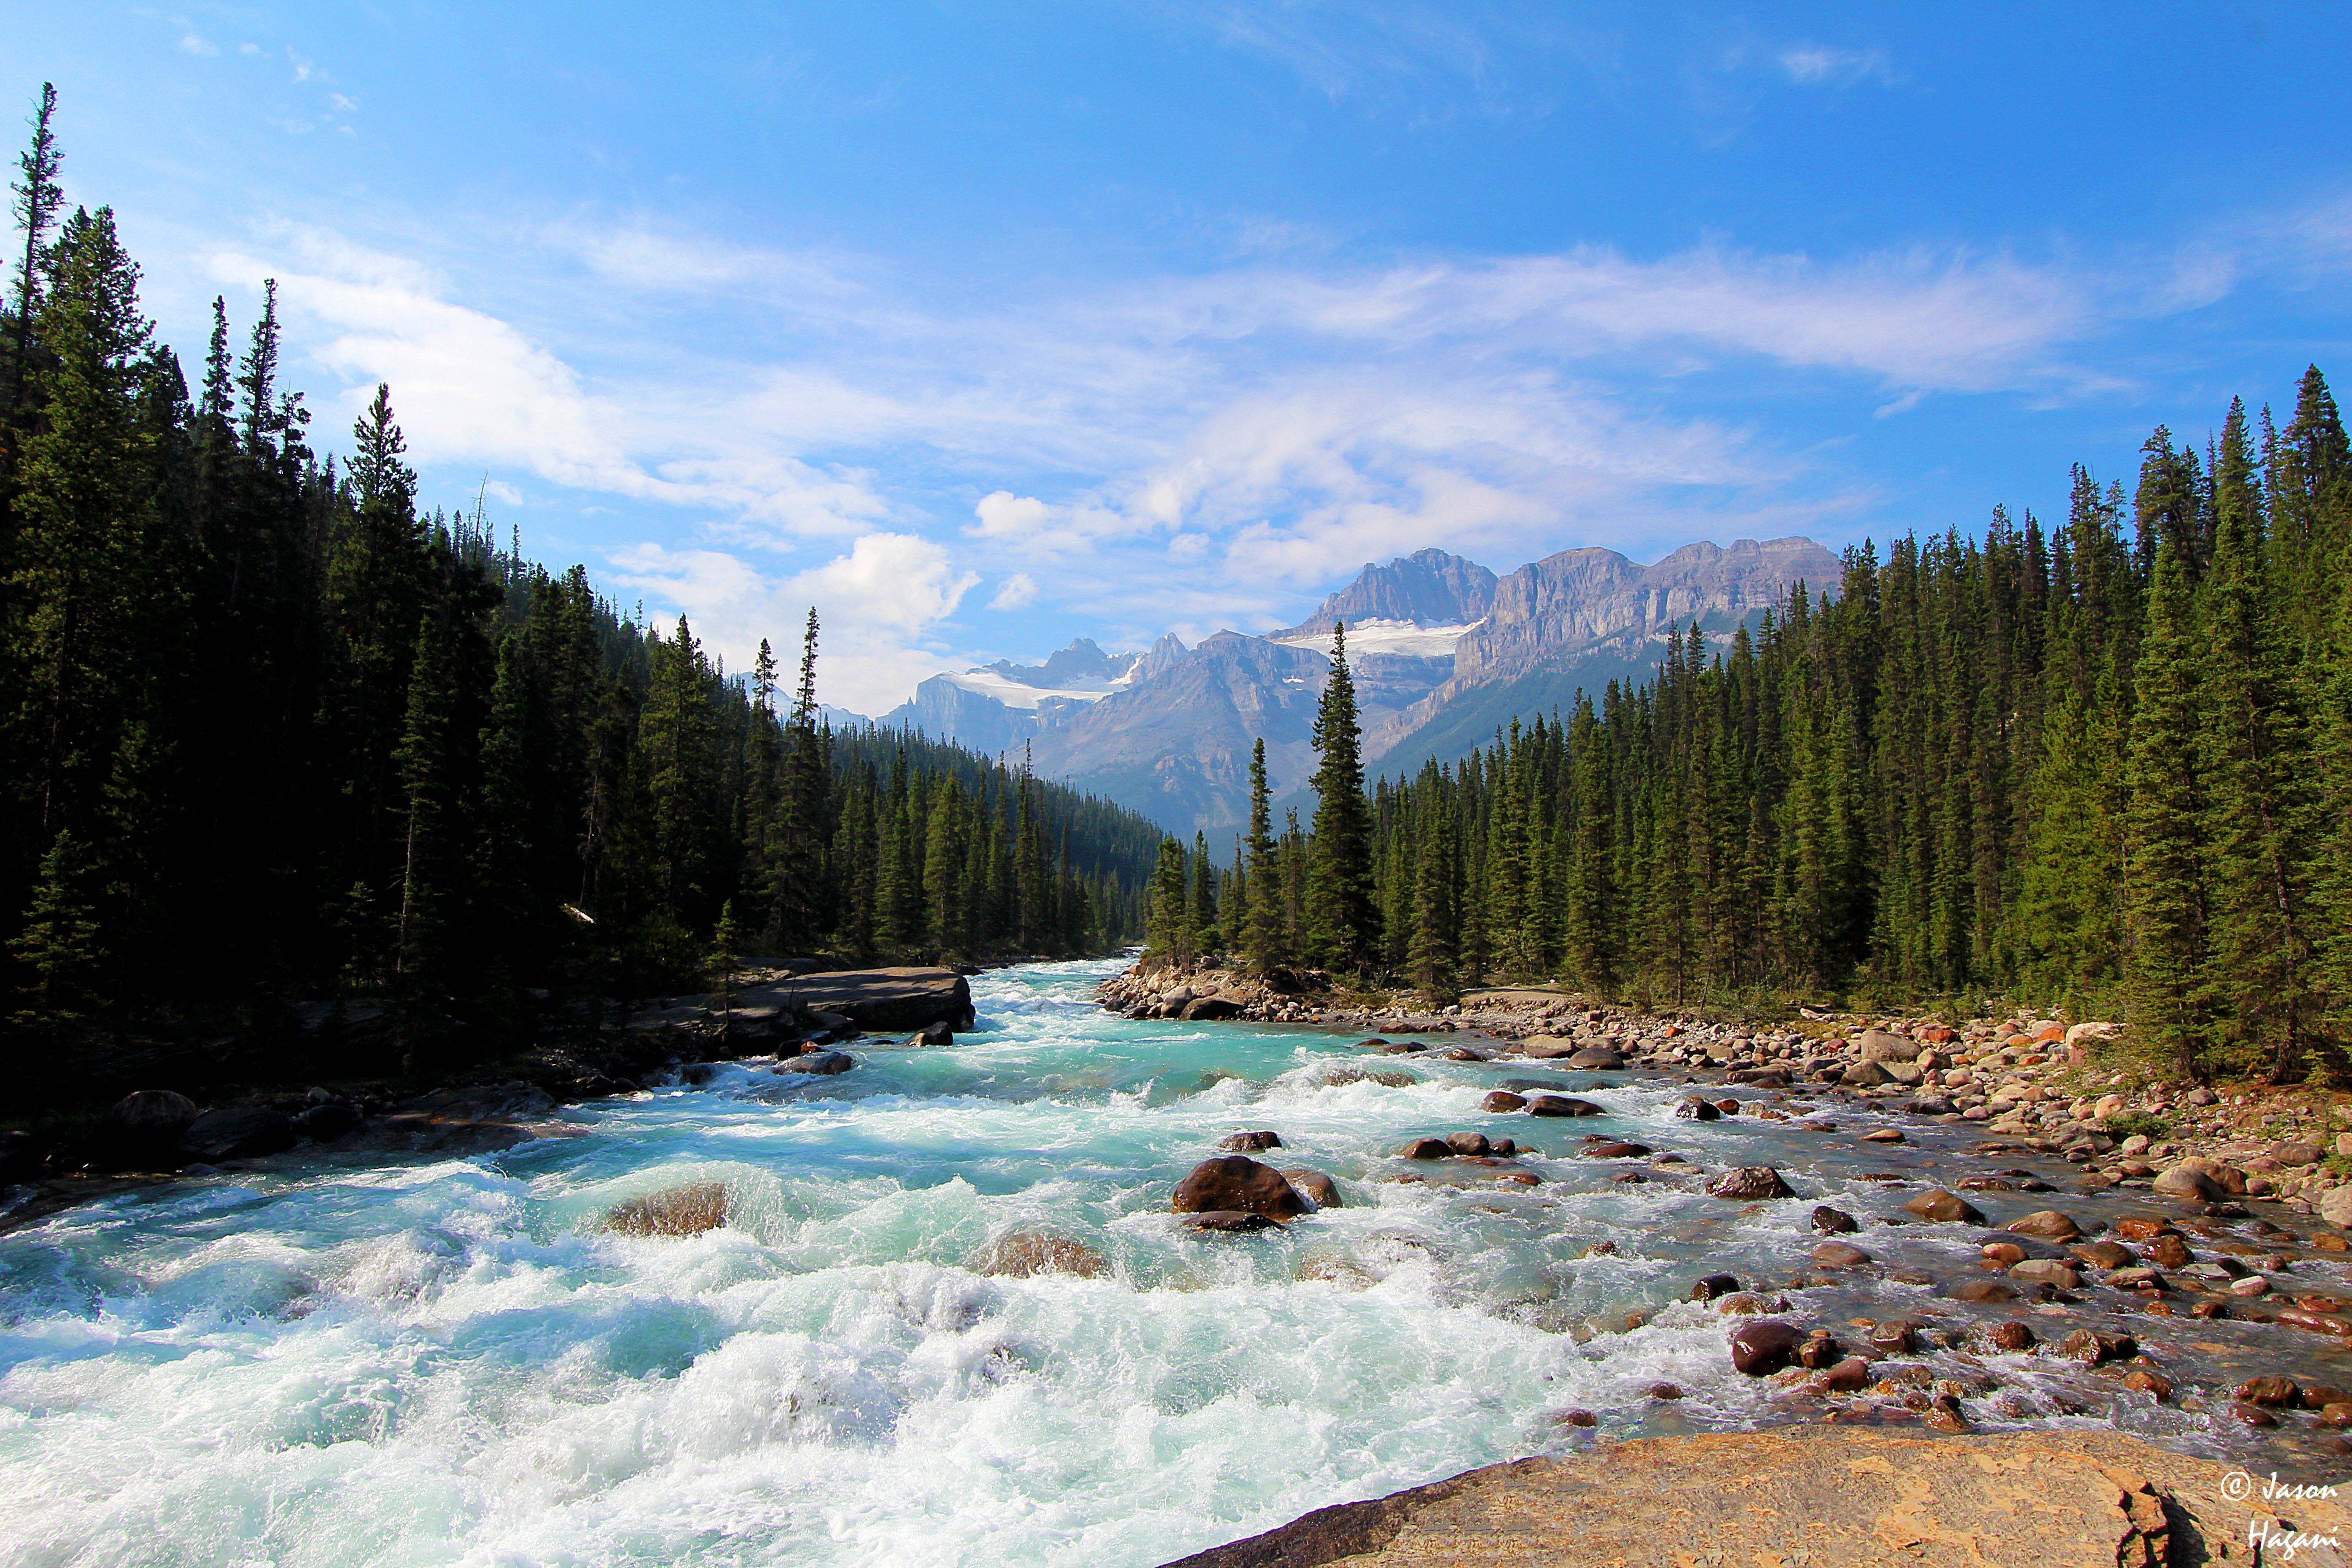 741635 descargar imagen tierra/naturaleza, rio, parque nacional banff, canadá, bosque, paisaje: fondos de pantalla y protectores de pantalla gratis